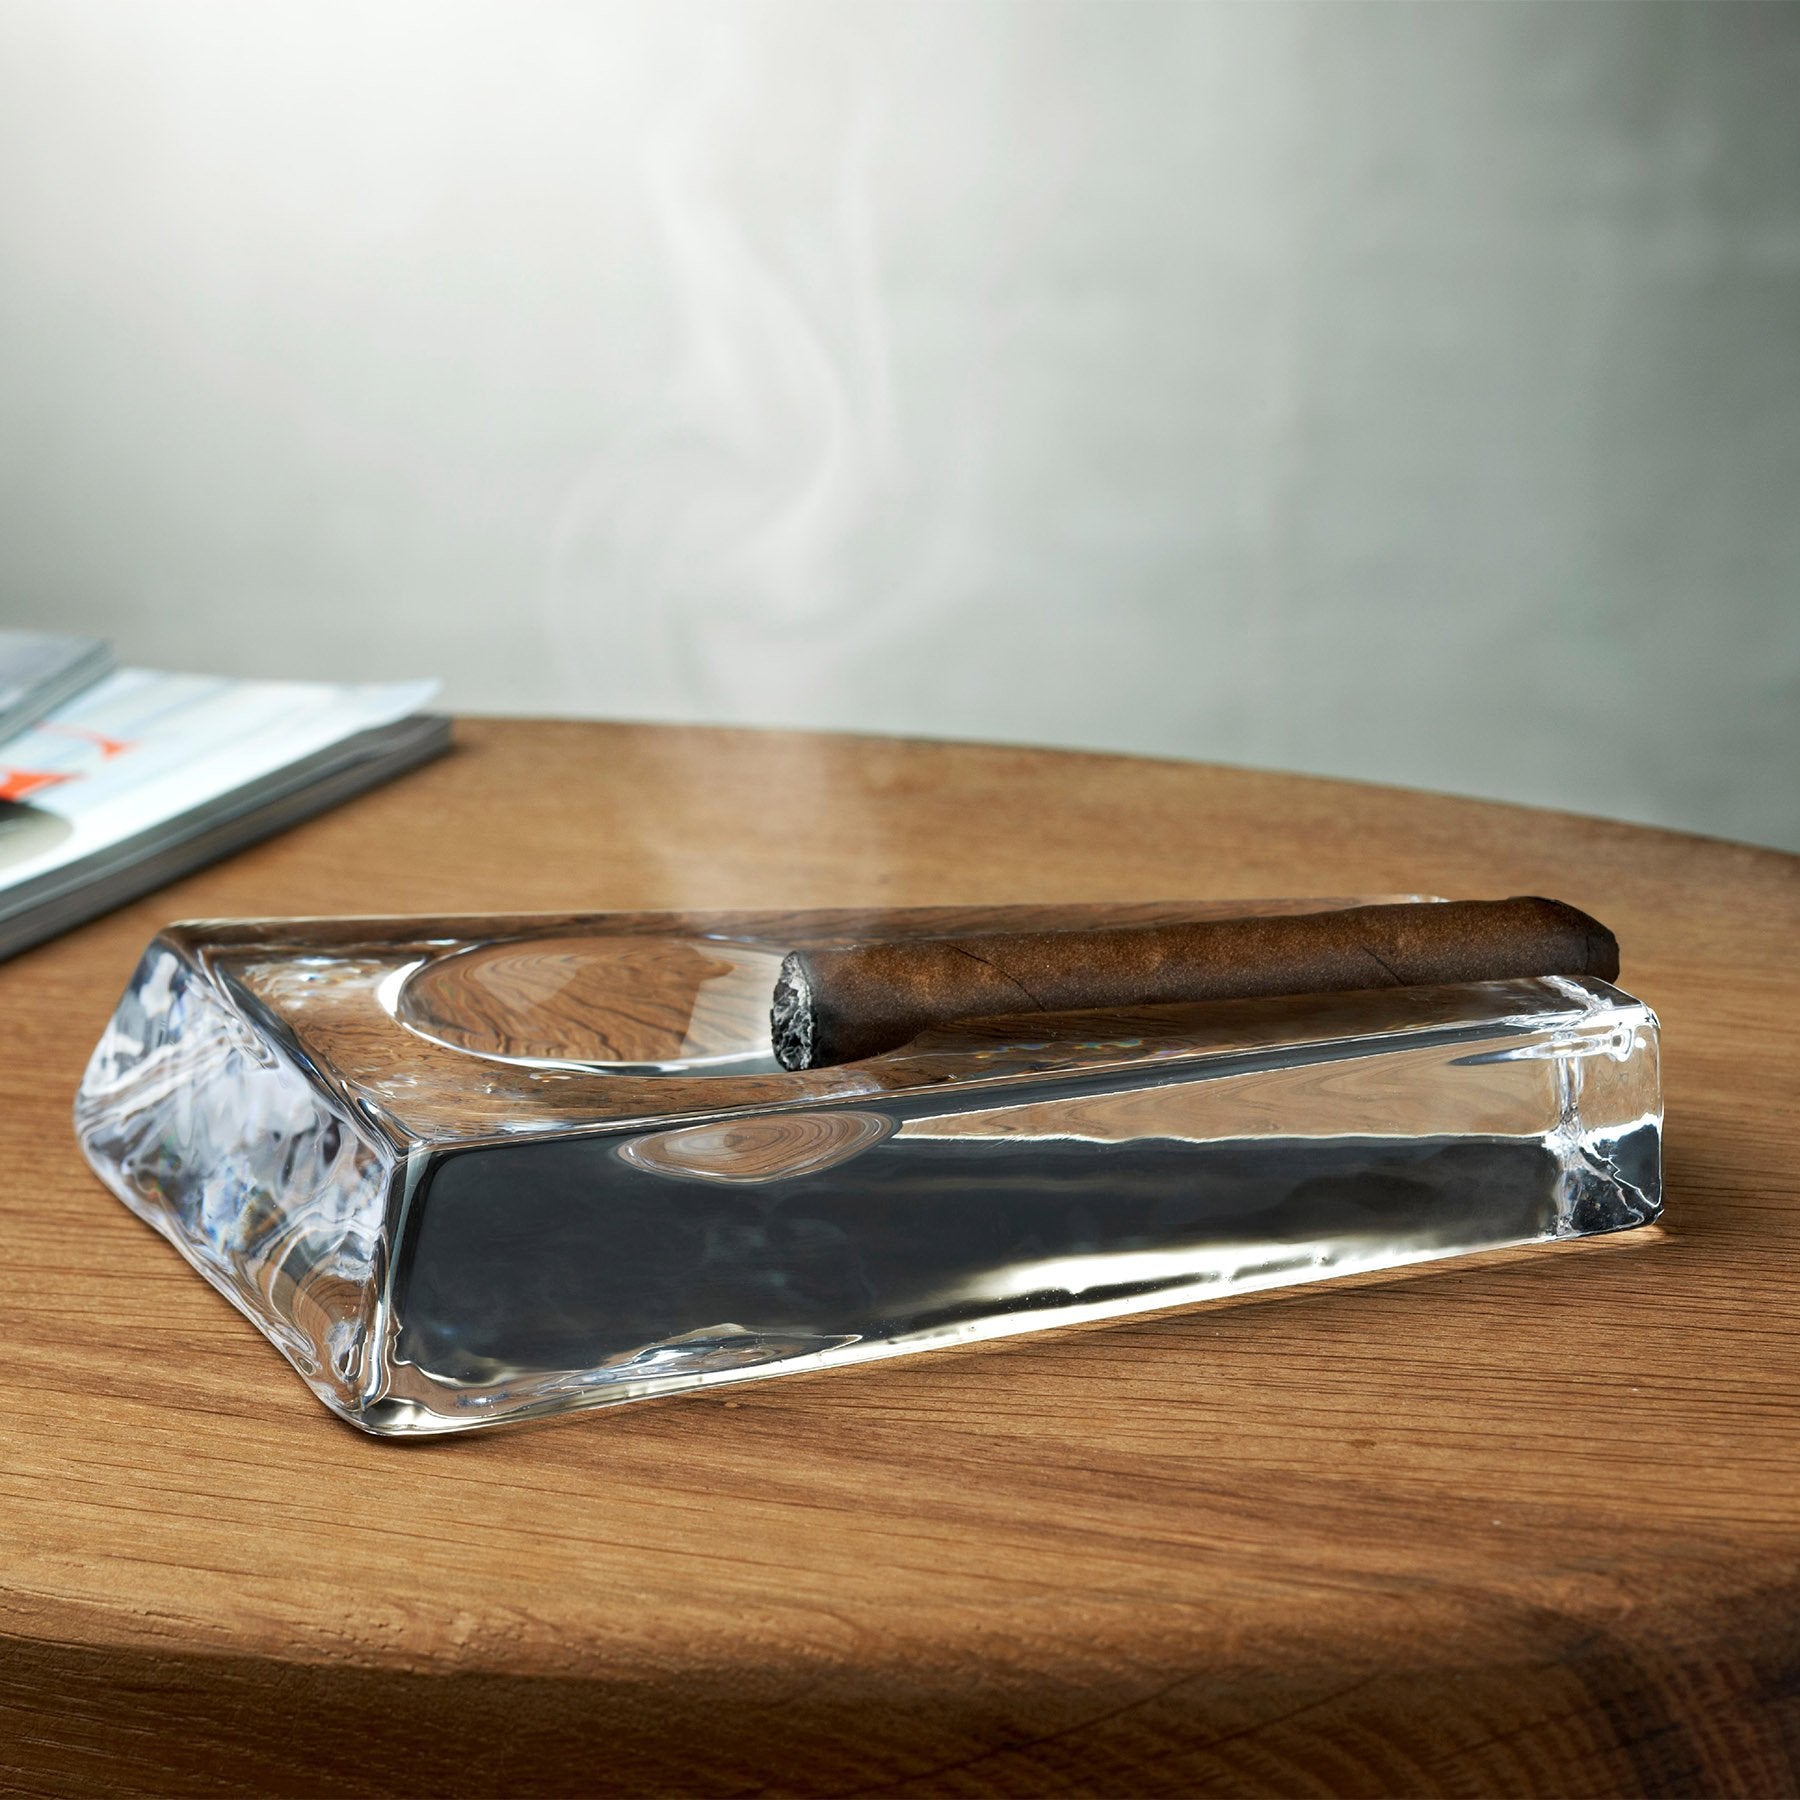 cigarette stick on clear glass ashtray by Nodar Chernishev. Photo stock -  StudioNow